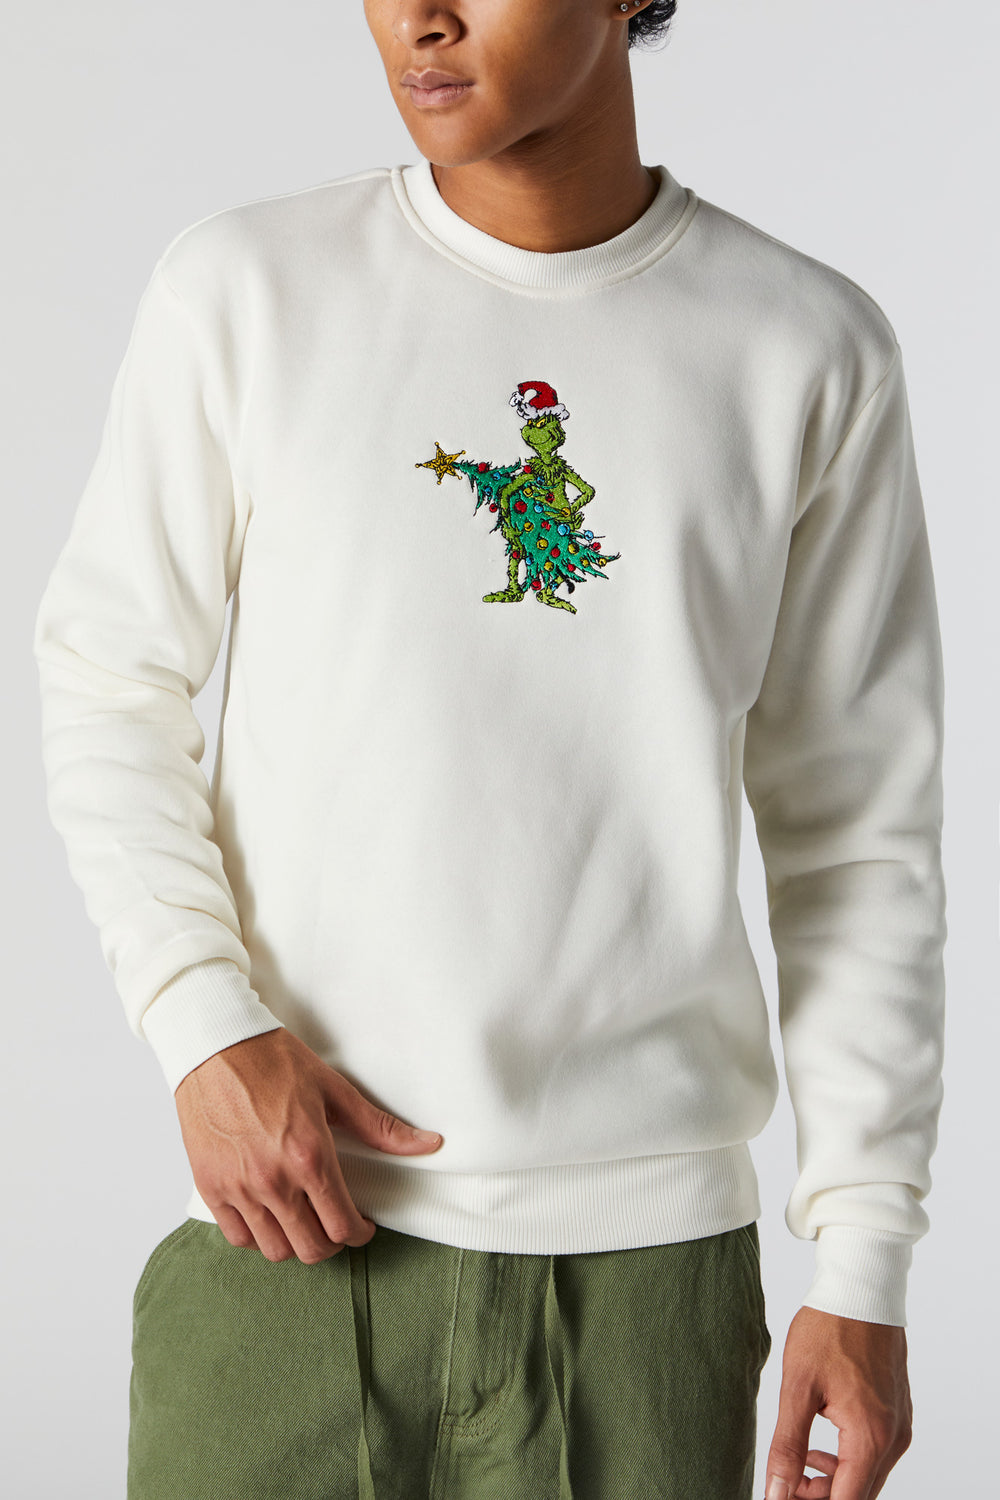 The Grinch Embroidered Fleece Sweatshirt The Grinch Embroidered Fleece Sweatshirt 4